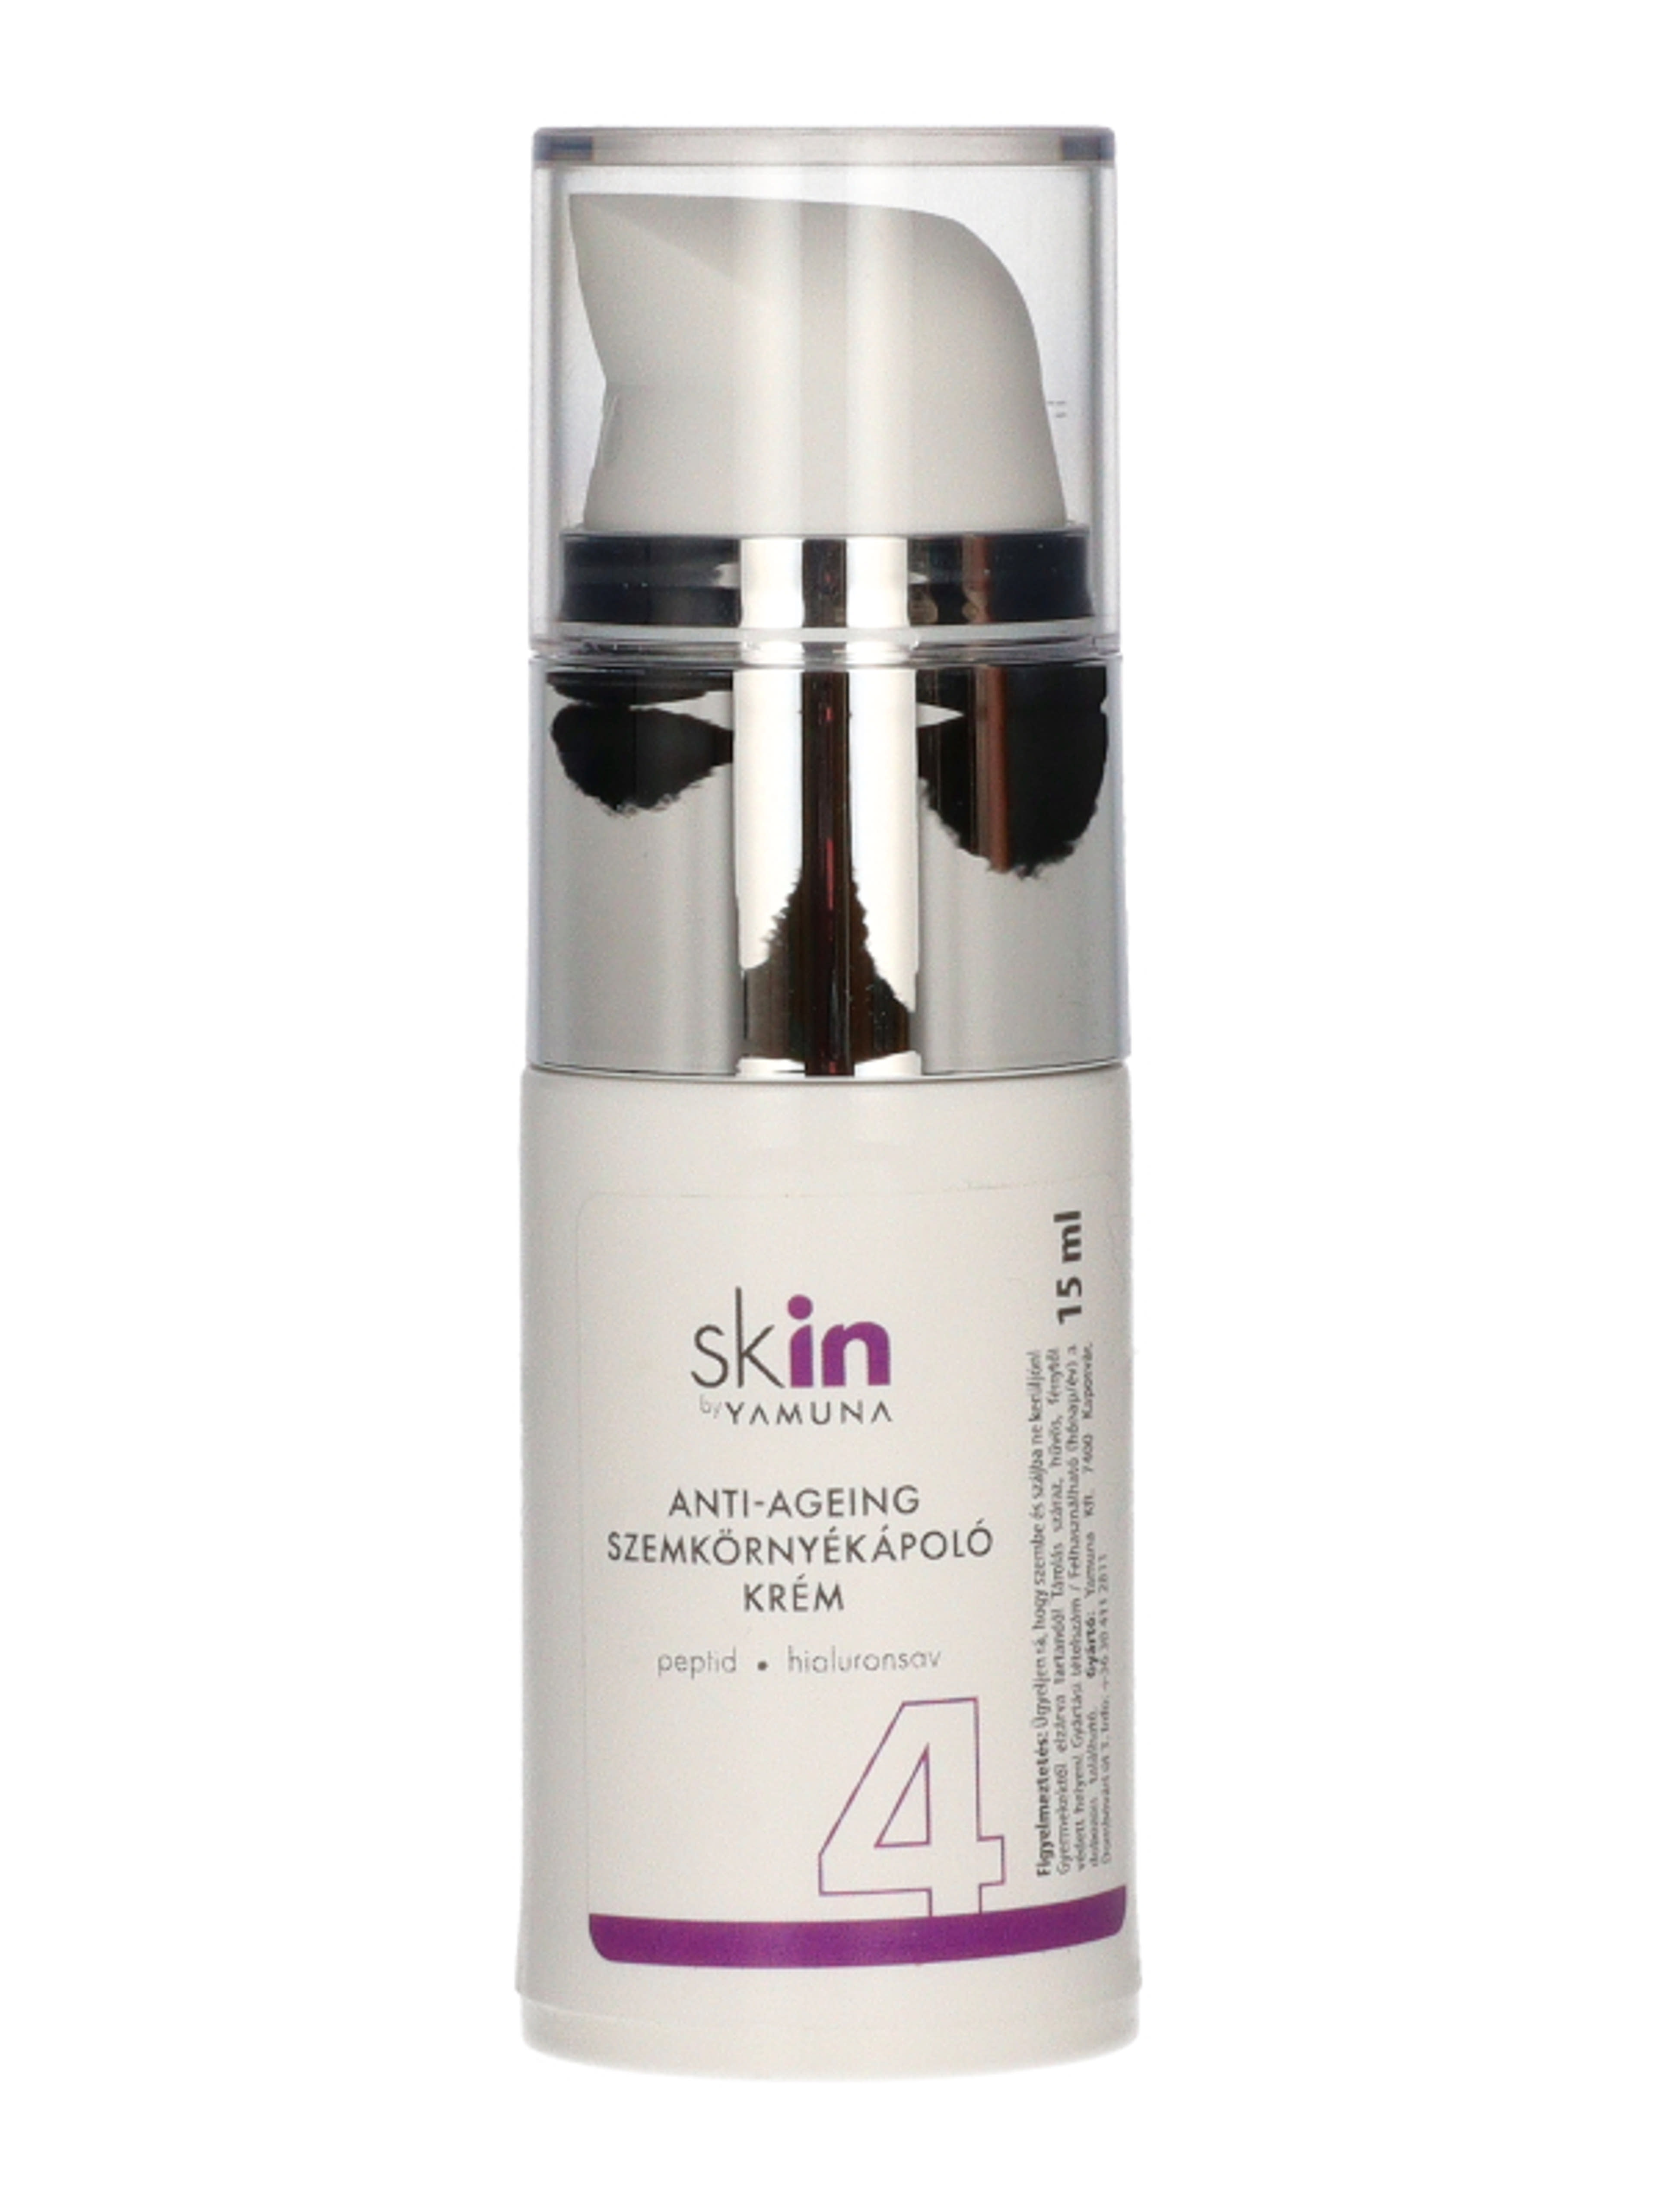 Yamuna Skin Anti-ageing szemkörnyékápoló - 15 ml-3